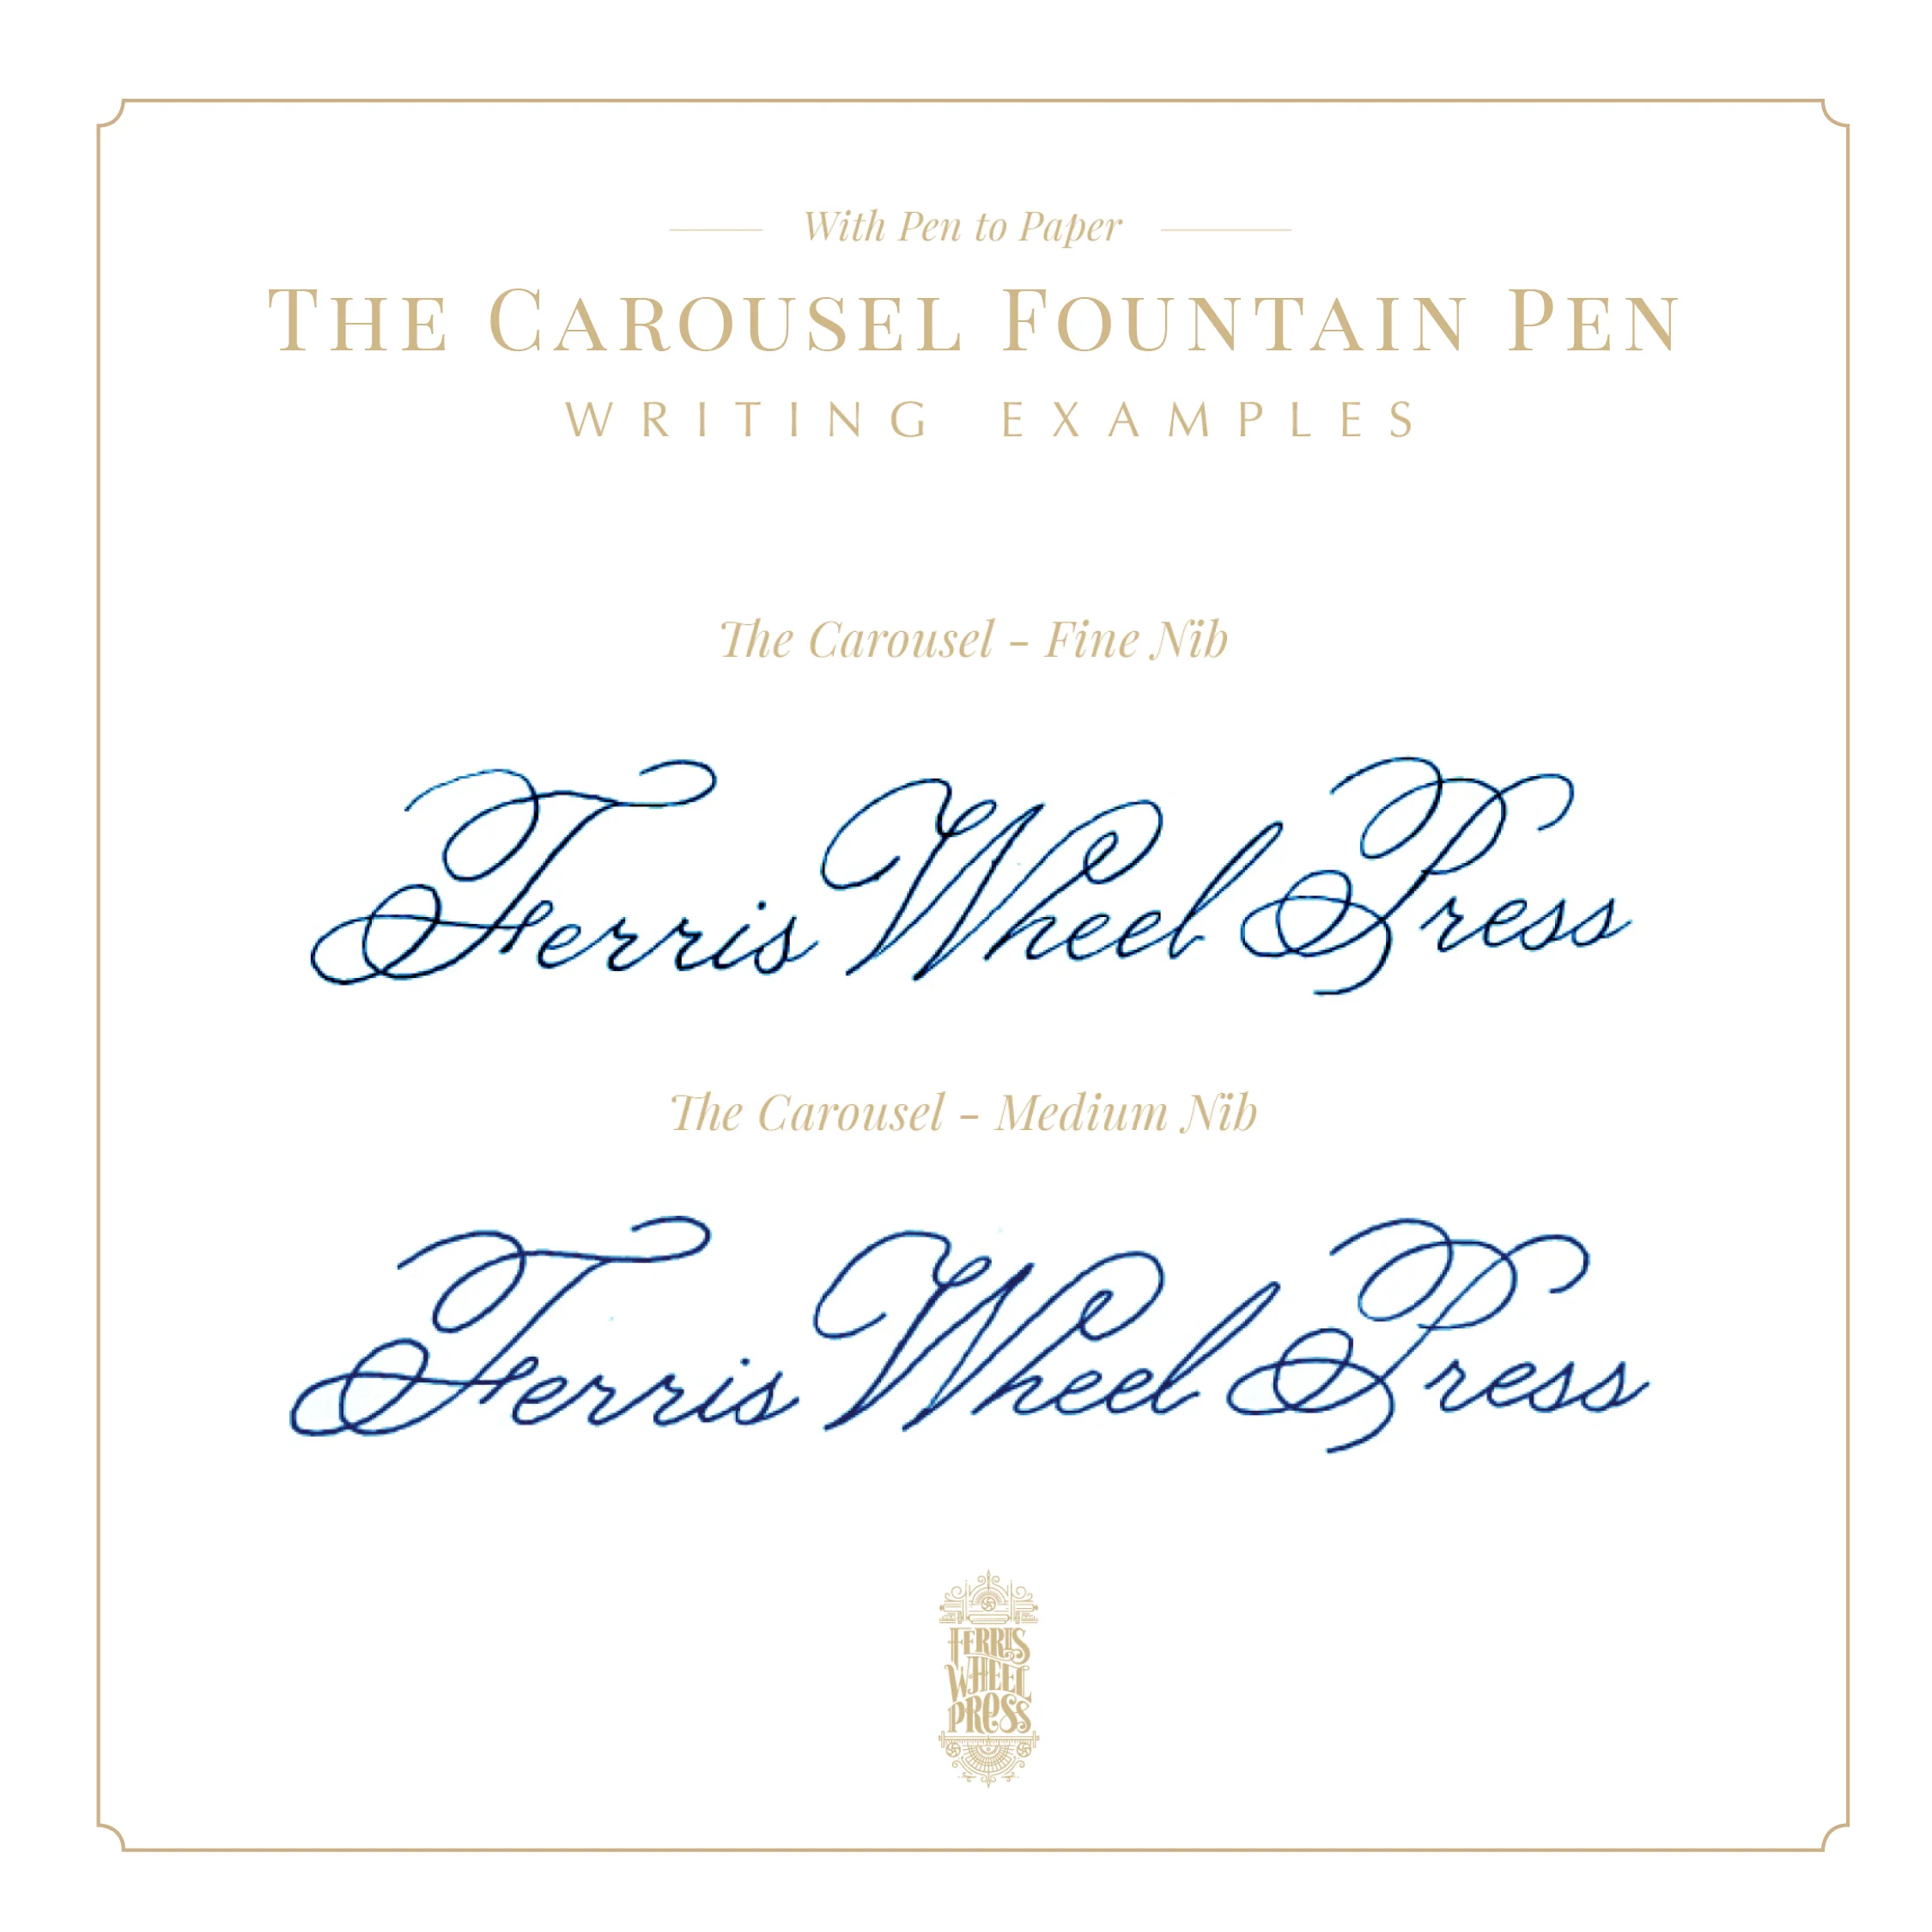 Ferris Wheel Press - Limited Edition - The Carousel Fountain Pen - Malibu Blush